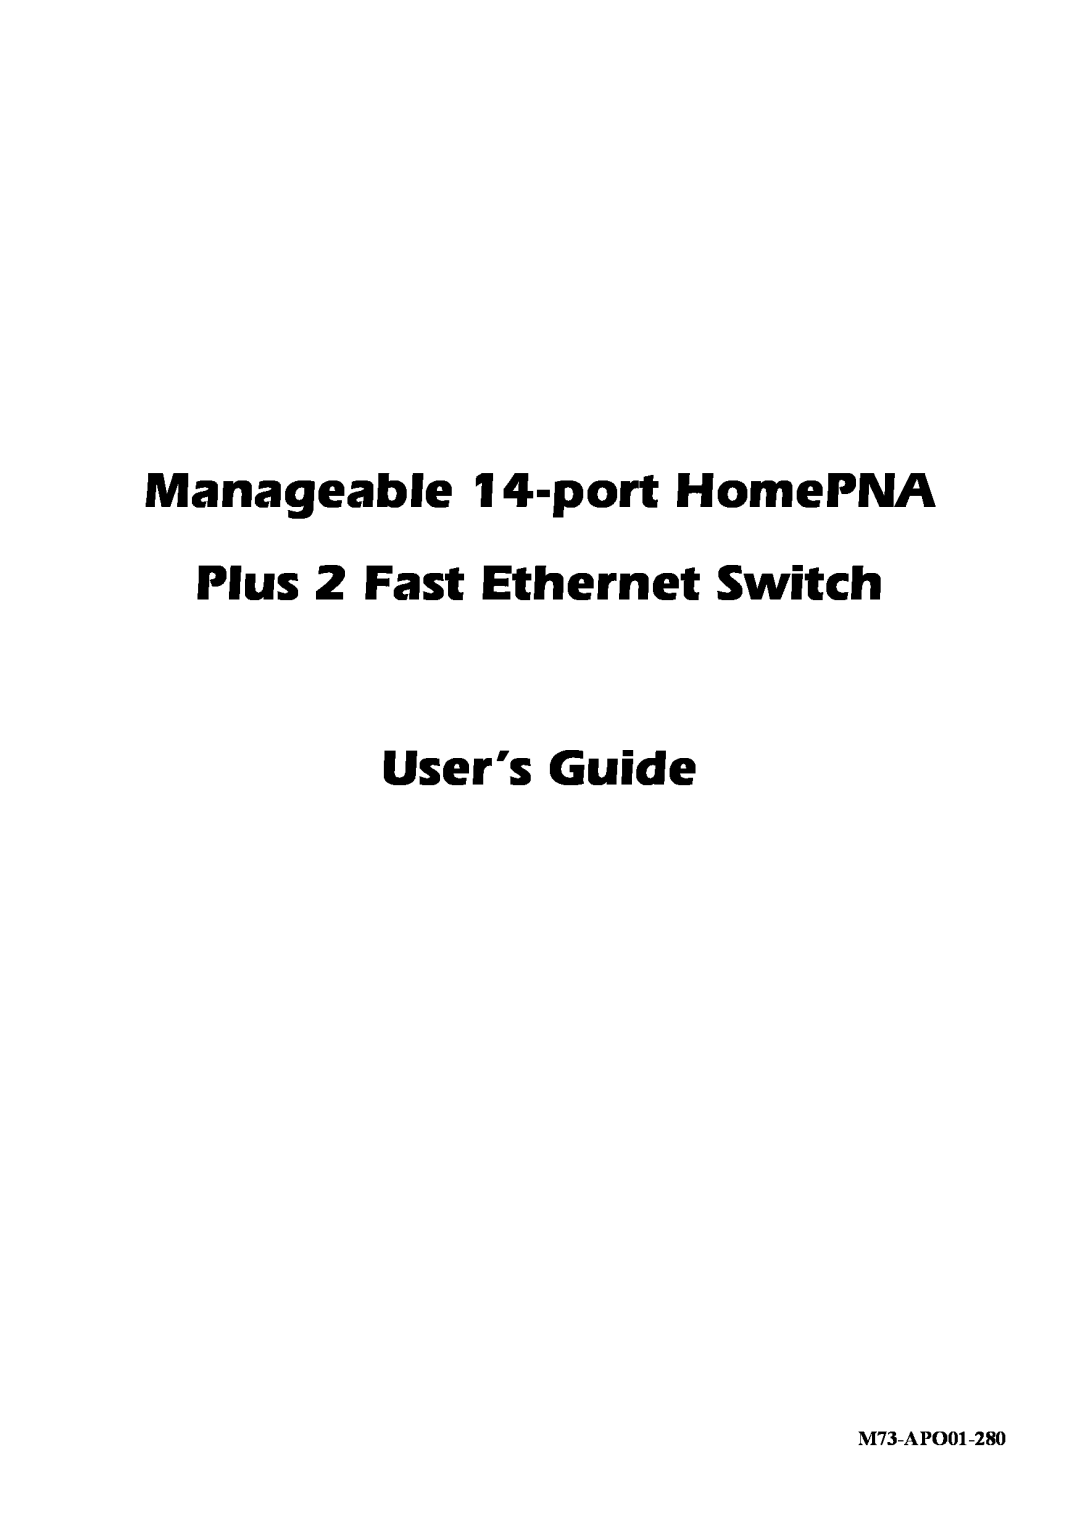 Abocom Manageable 14-port HomePNA Plus 2 Fast Ethernet Switch manual M73-APO01-280 